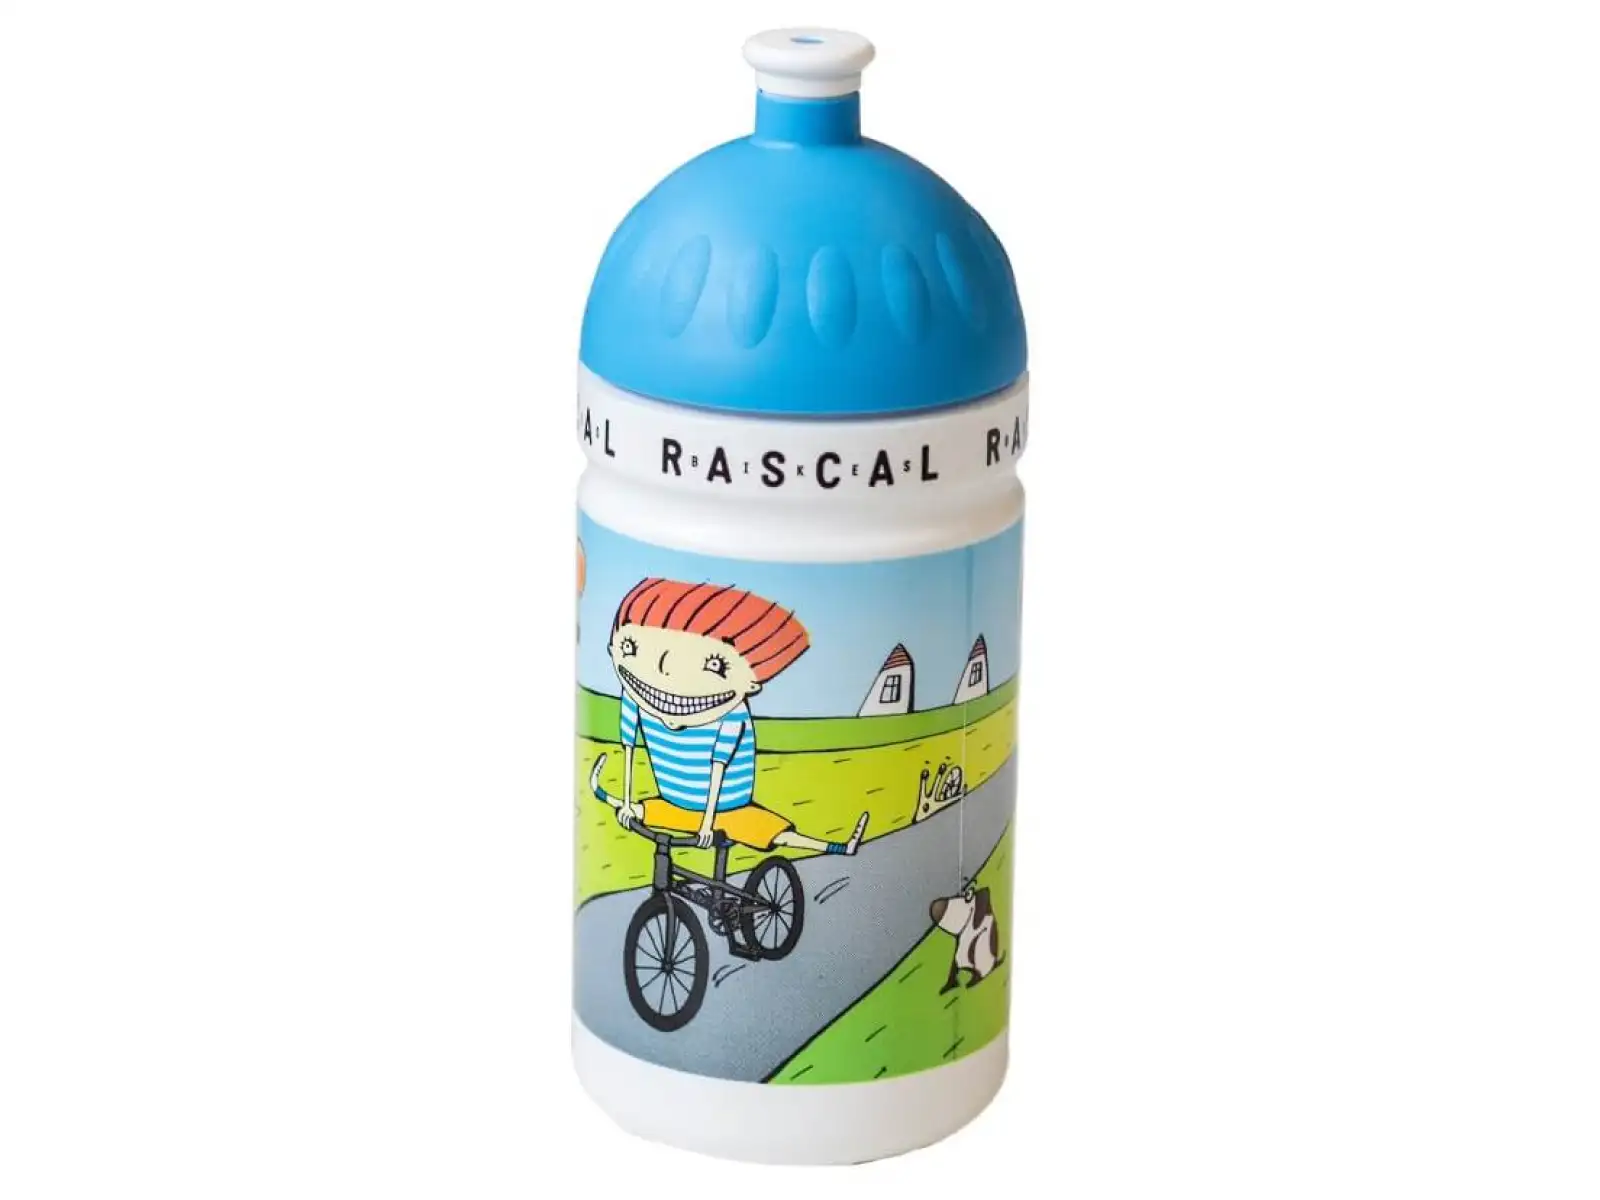 Rascal láhev 0,5 l logo kluk na kole